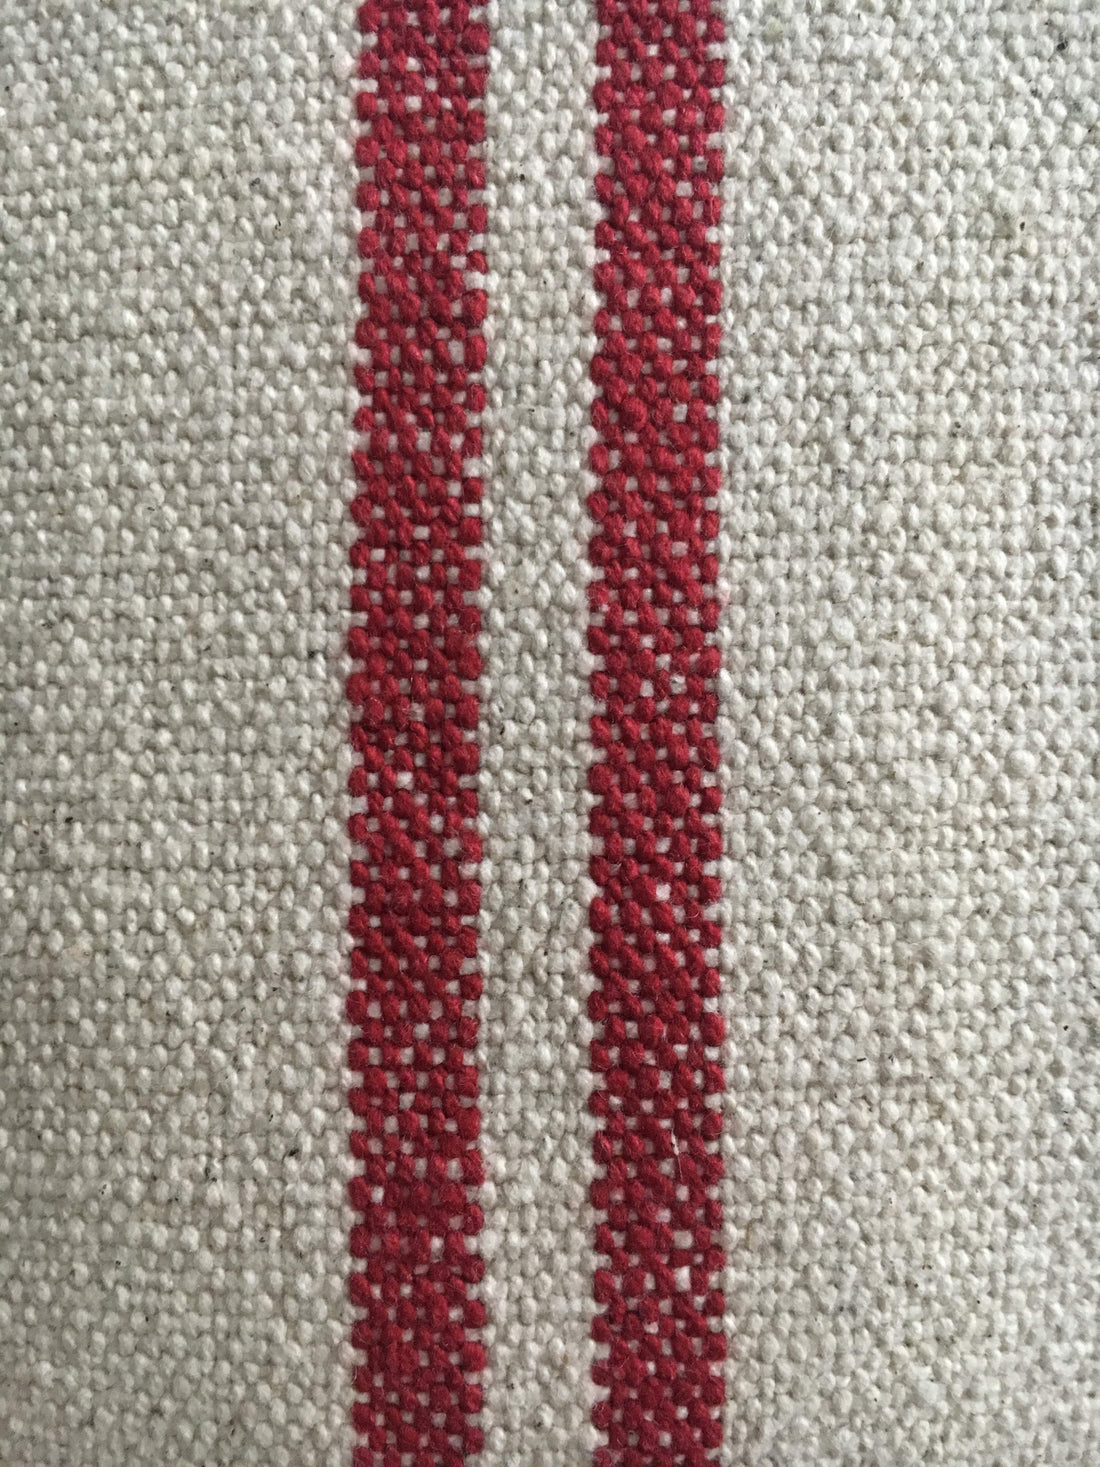 Rustic Red Stripe Grainsack Cushion